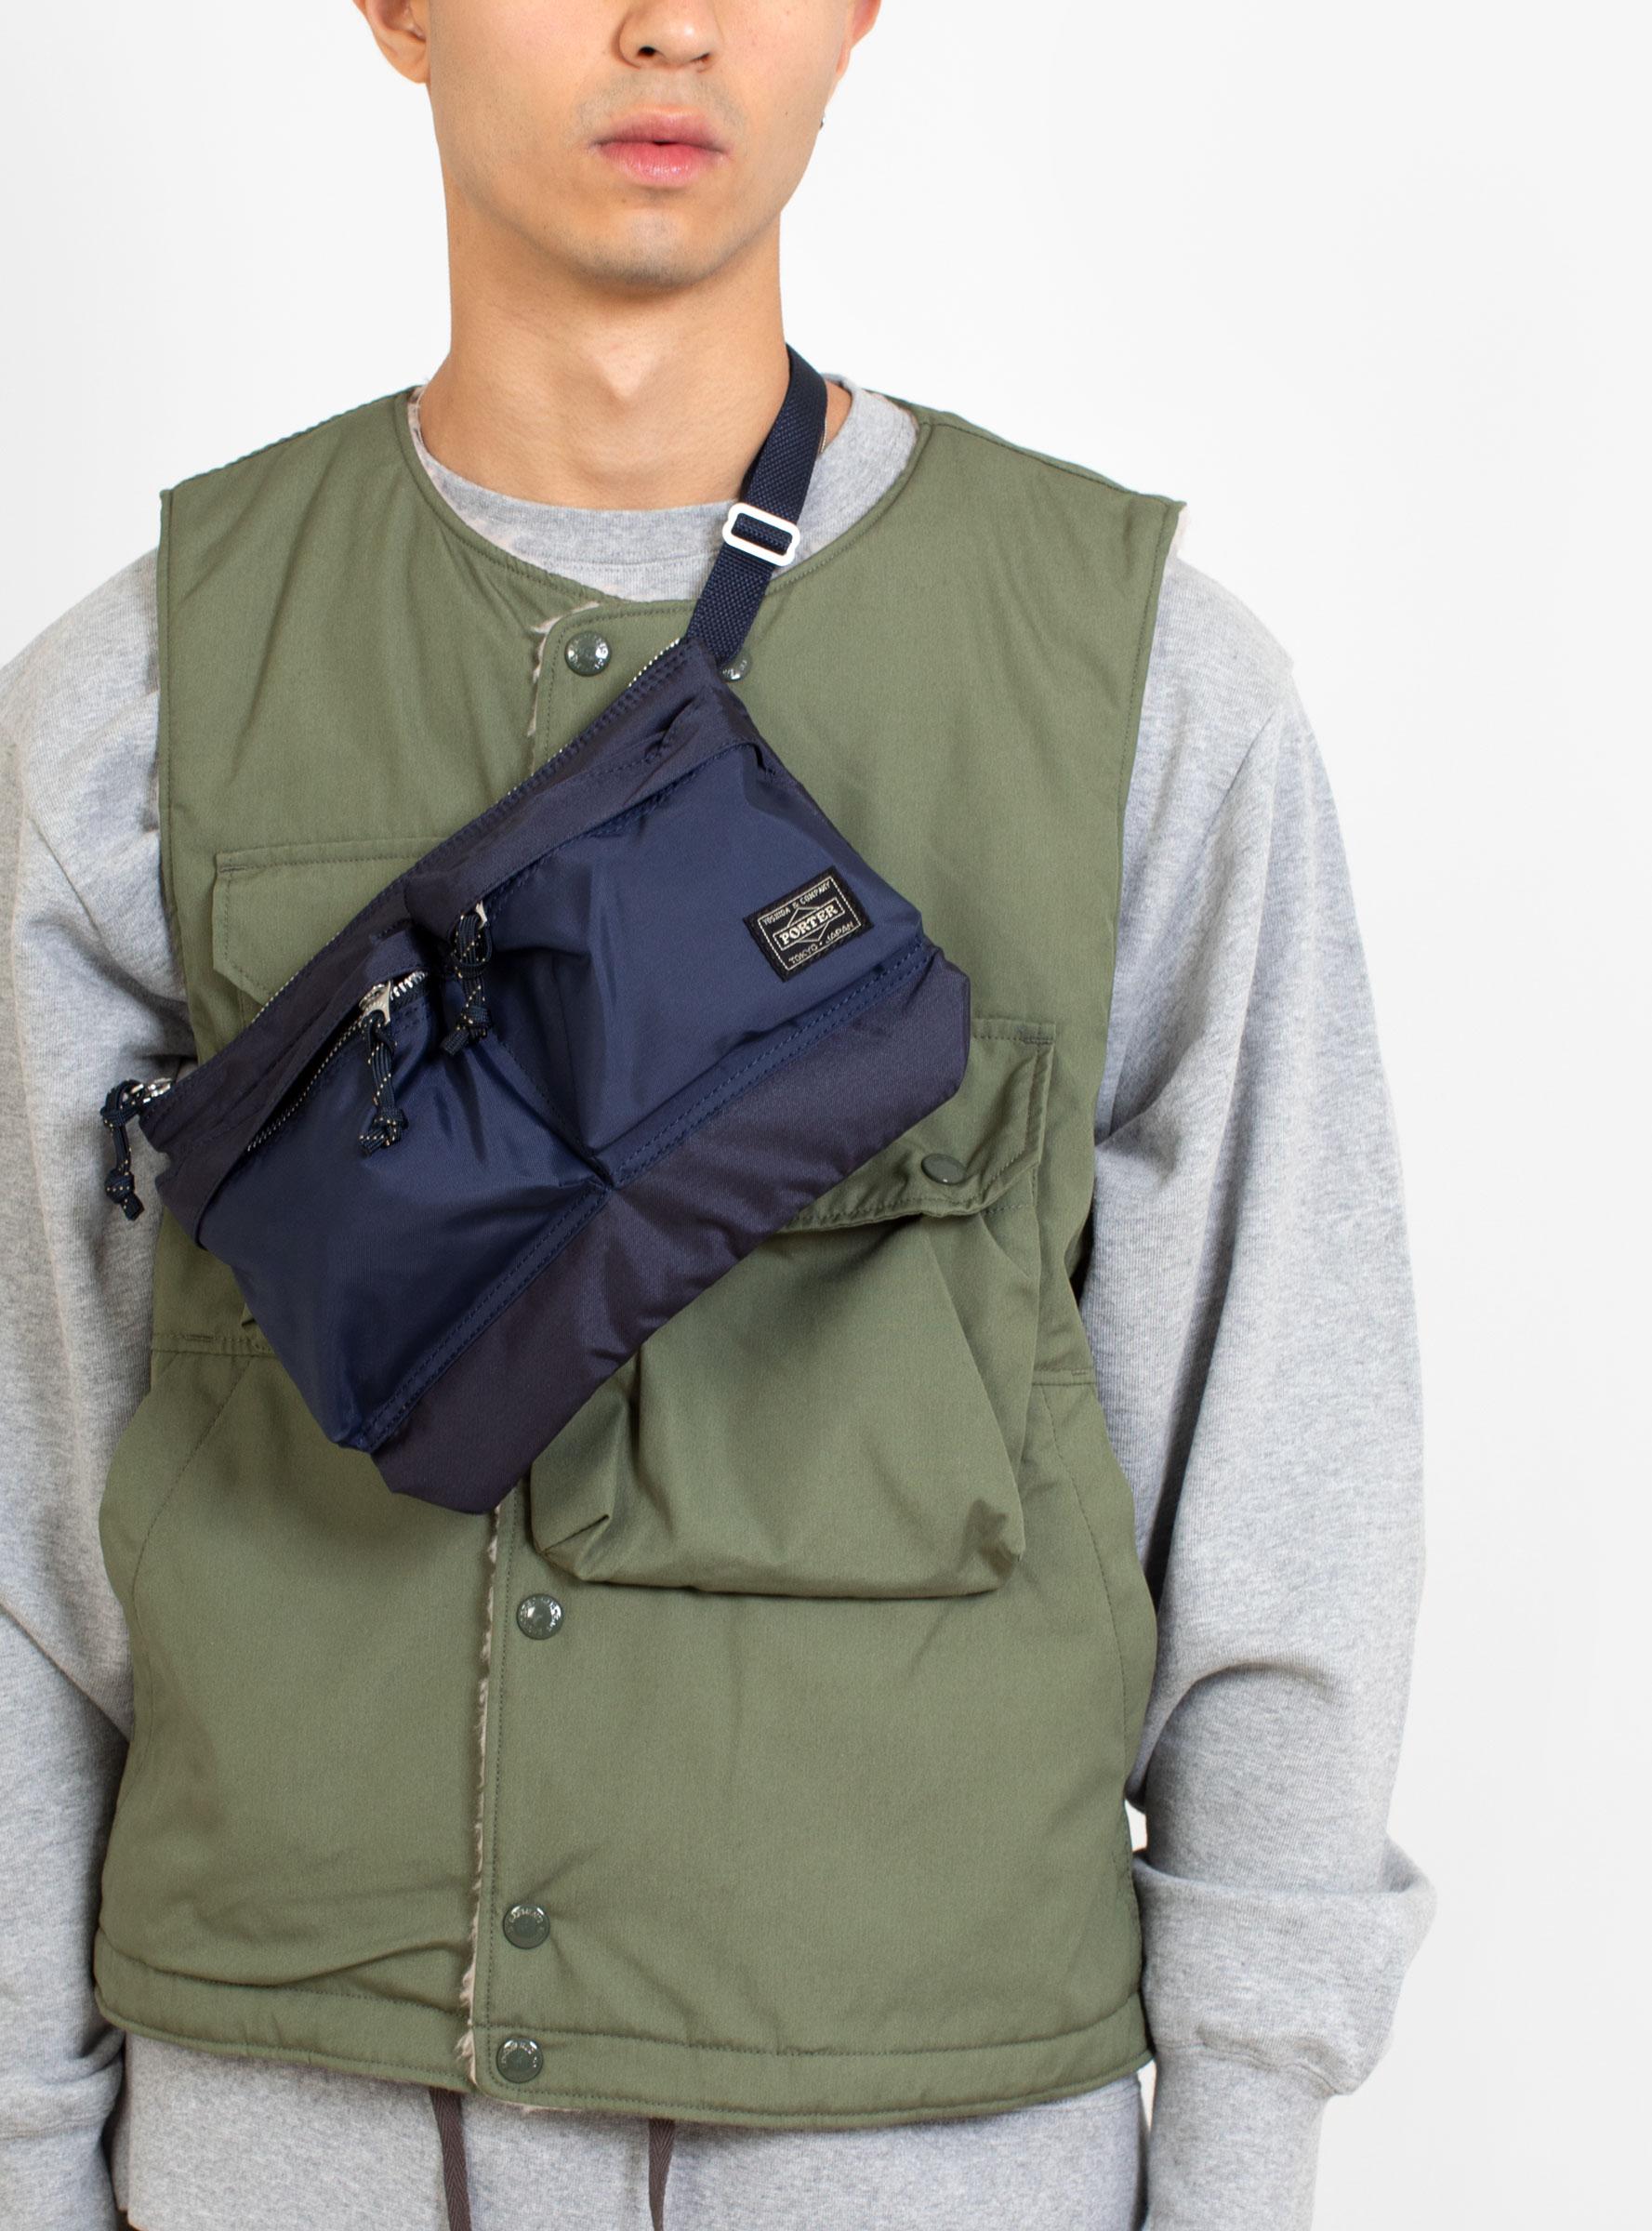 Pastele Glitter Force Custom Backpack Personalized School Bag Travel Bag  Work Bag Laptop Lunch Office Book